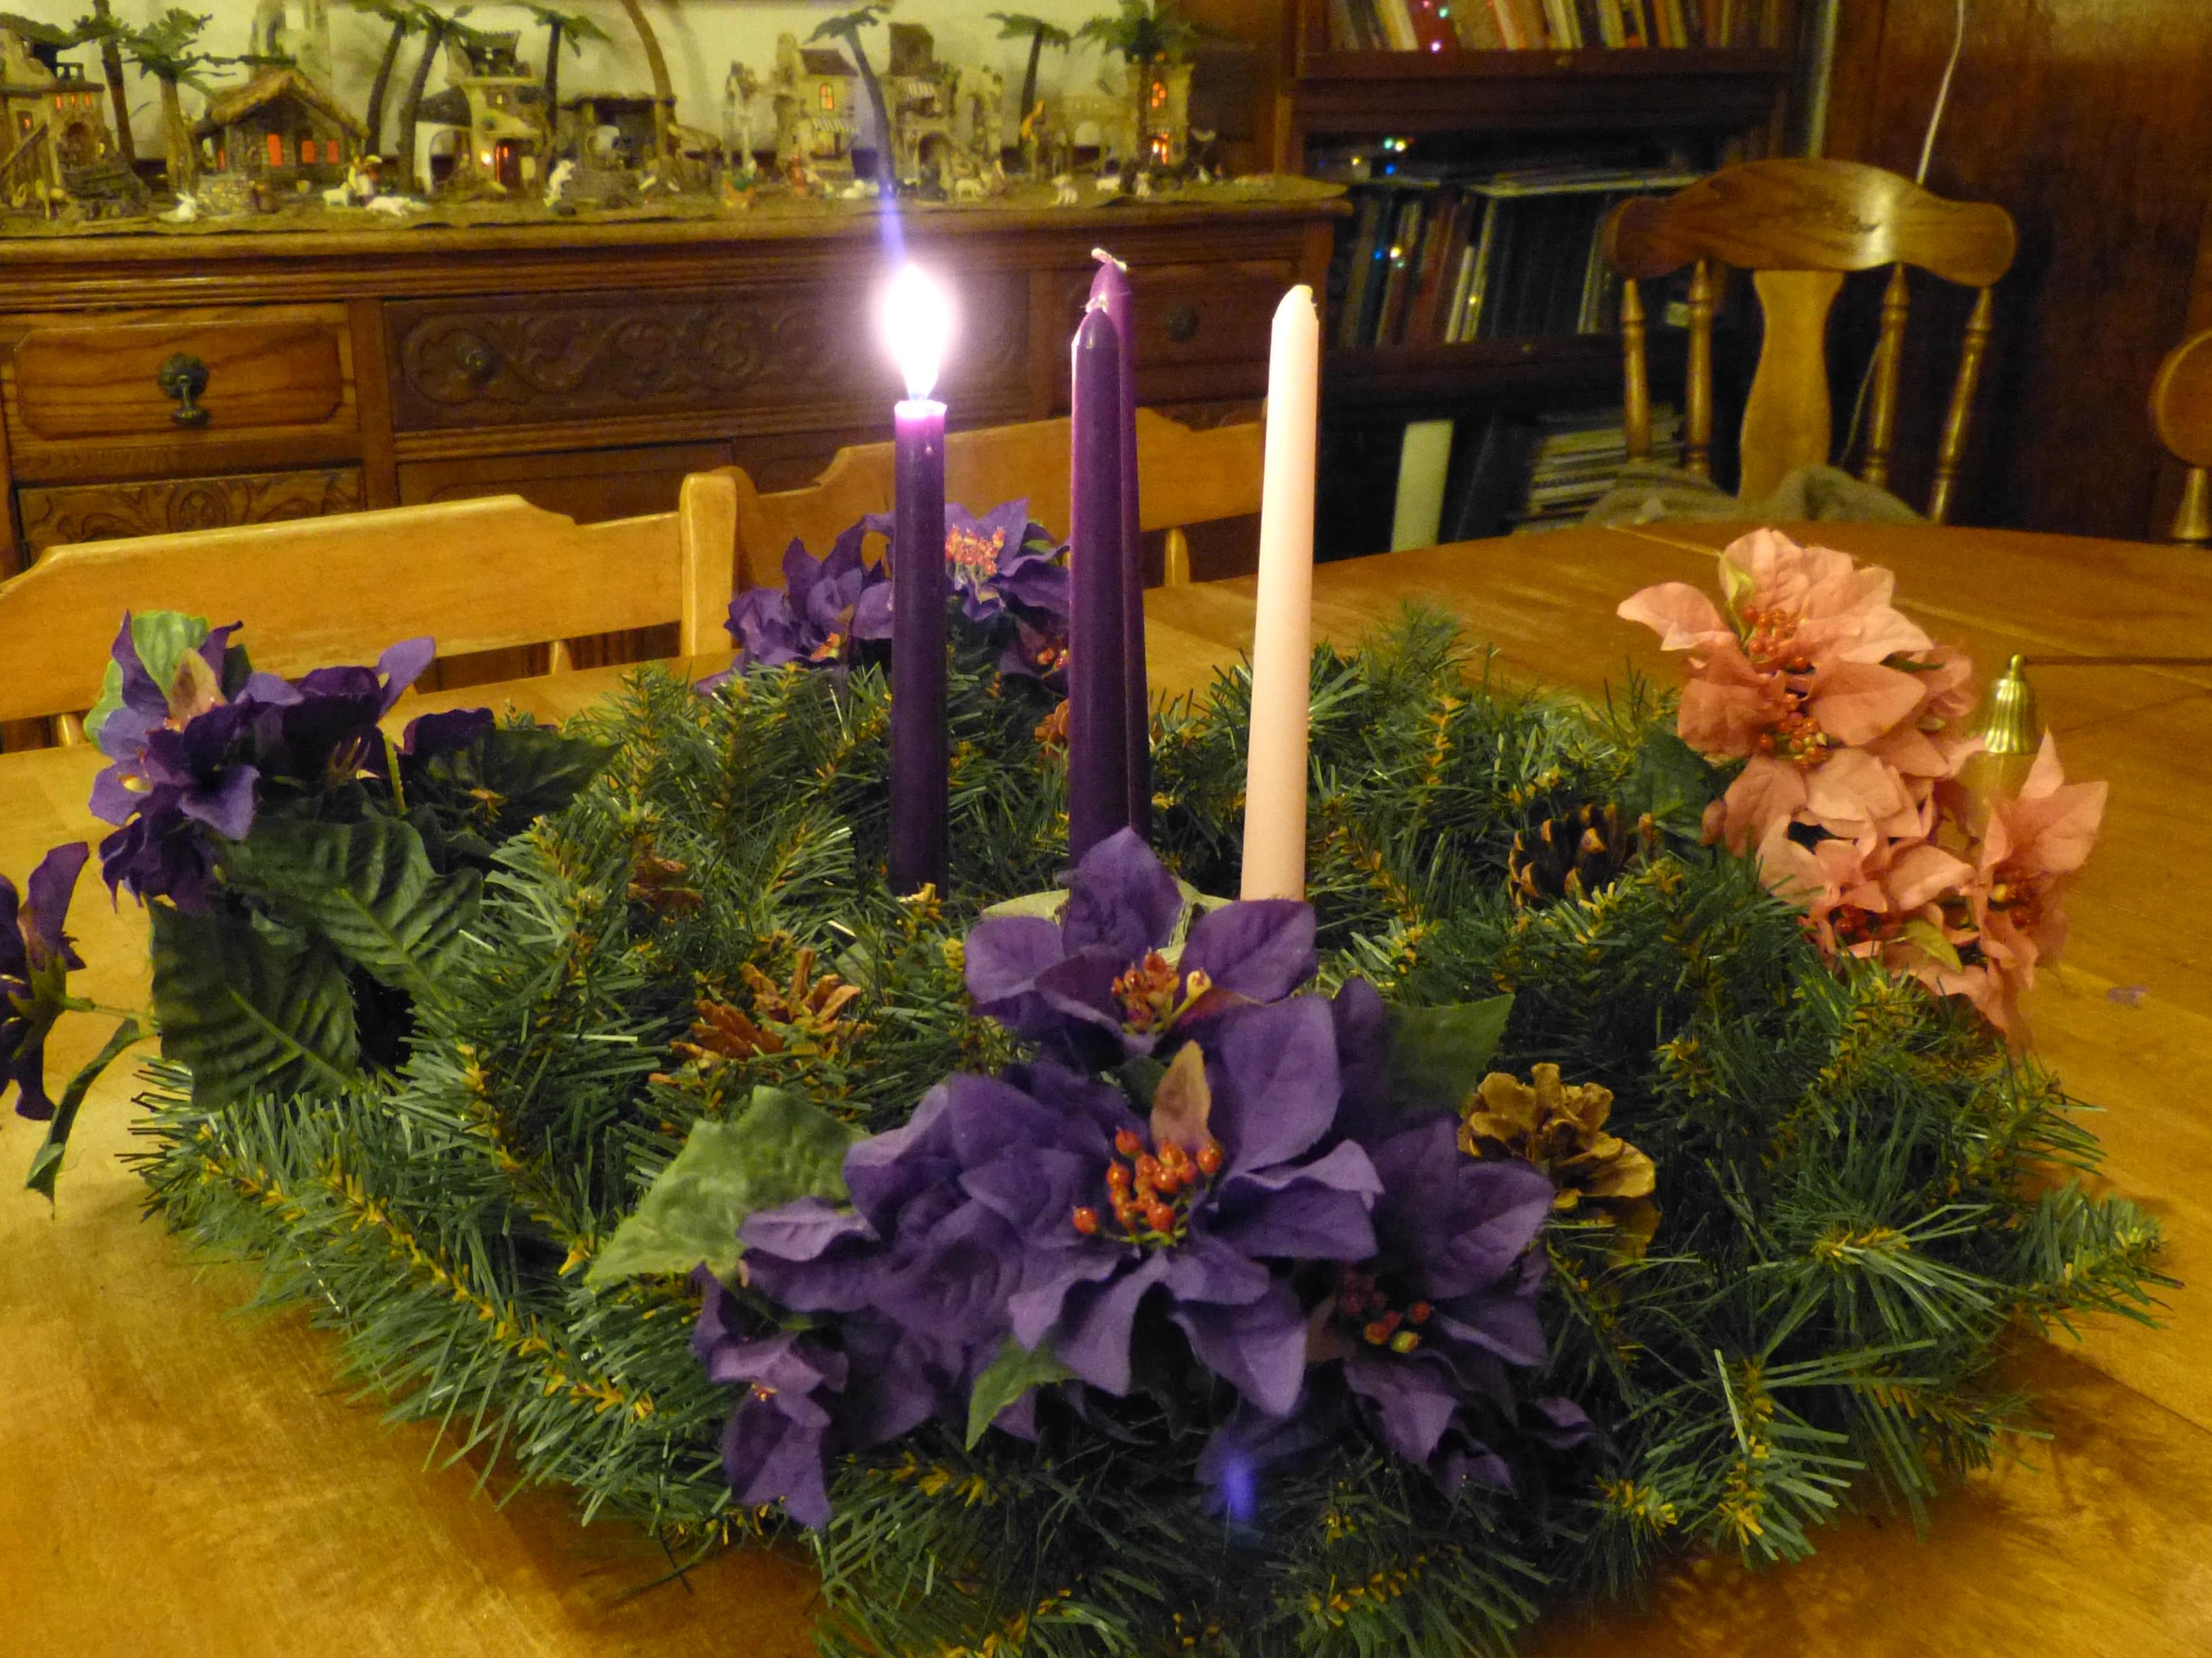 Roman Catholic Advent Season Four Joyful Weeks Before Christmas!